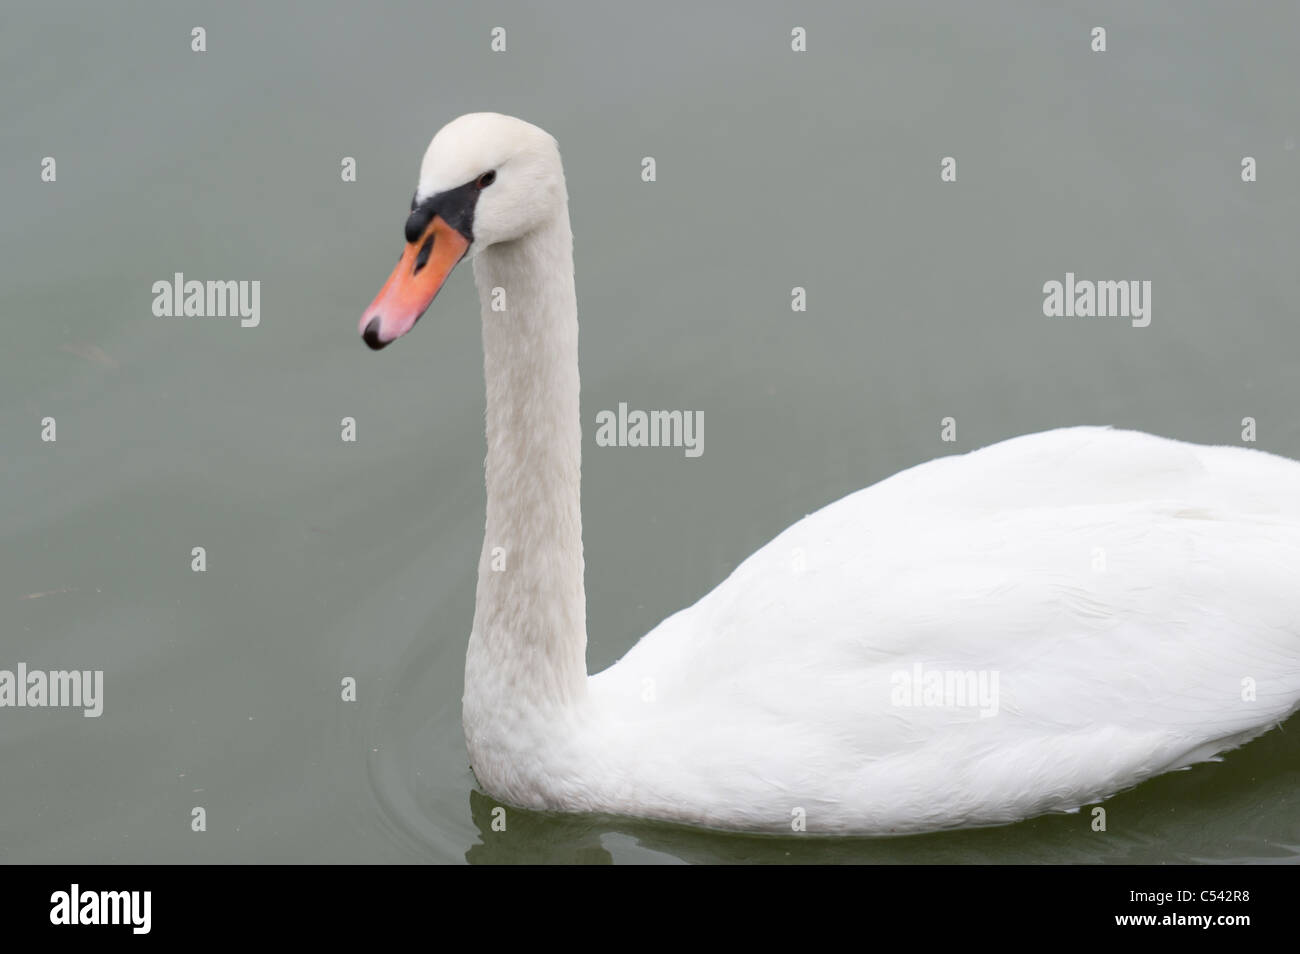 Swan swimming in a lake, Tokyo, Japan Stock Photo